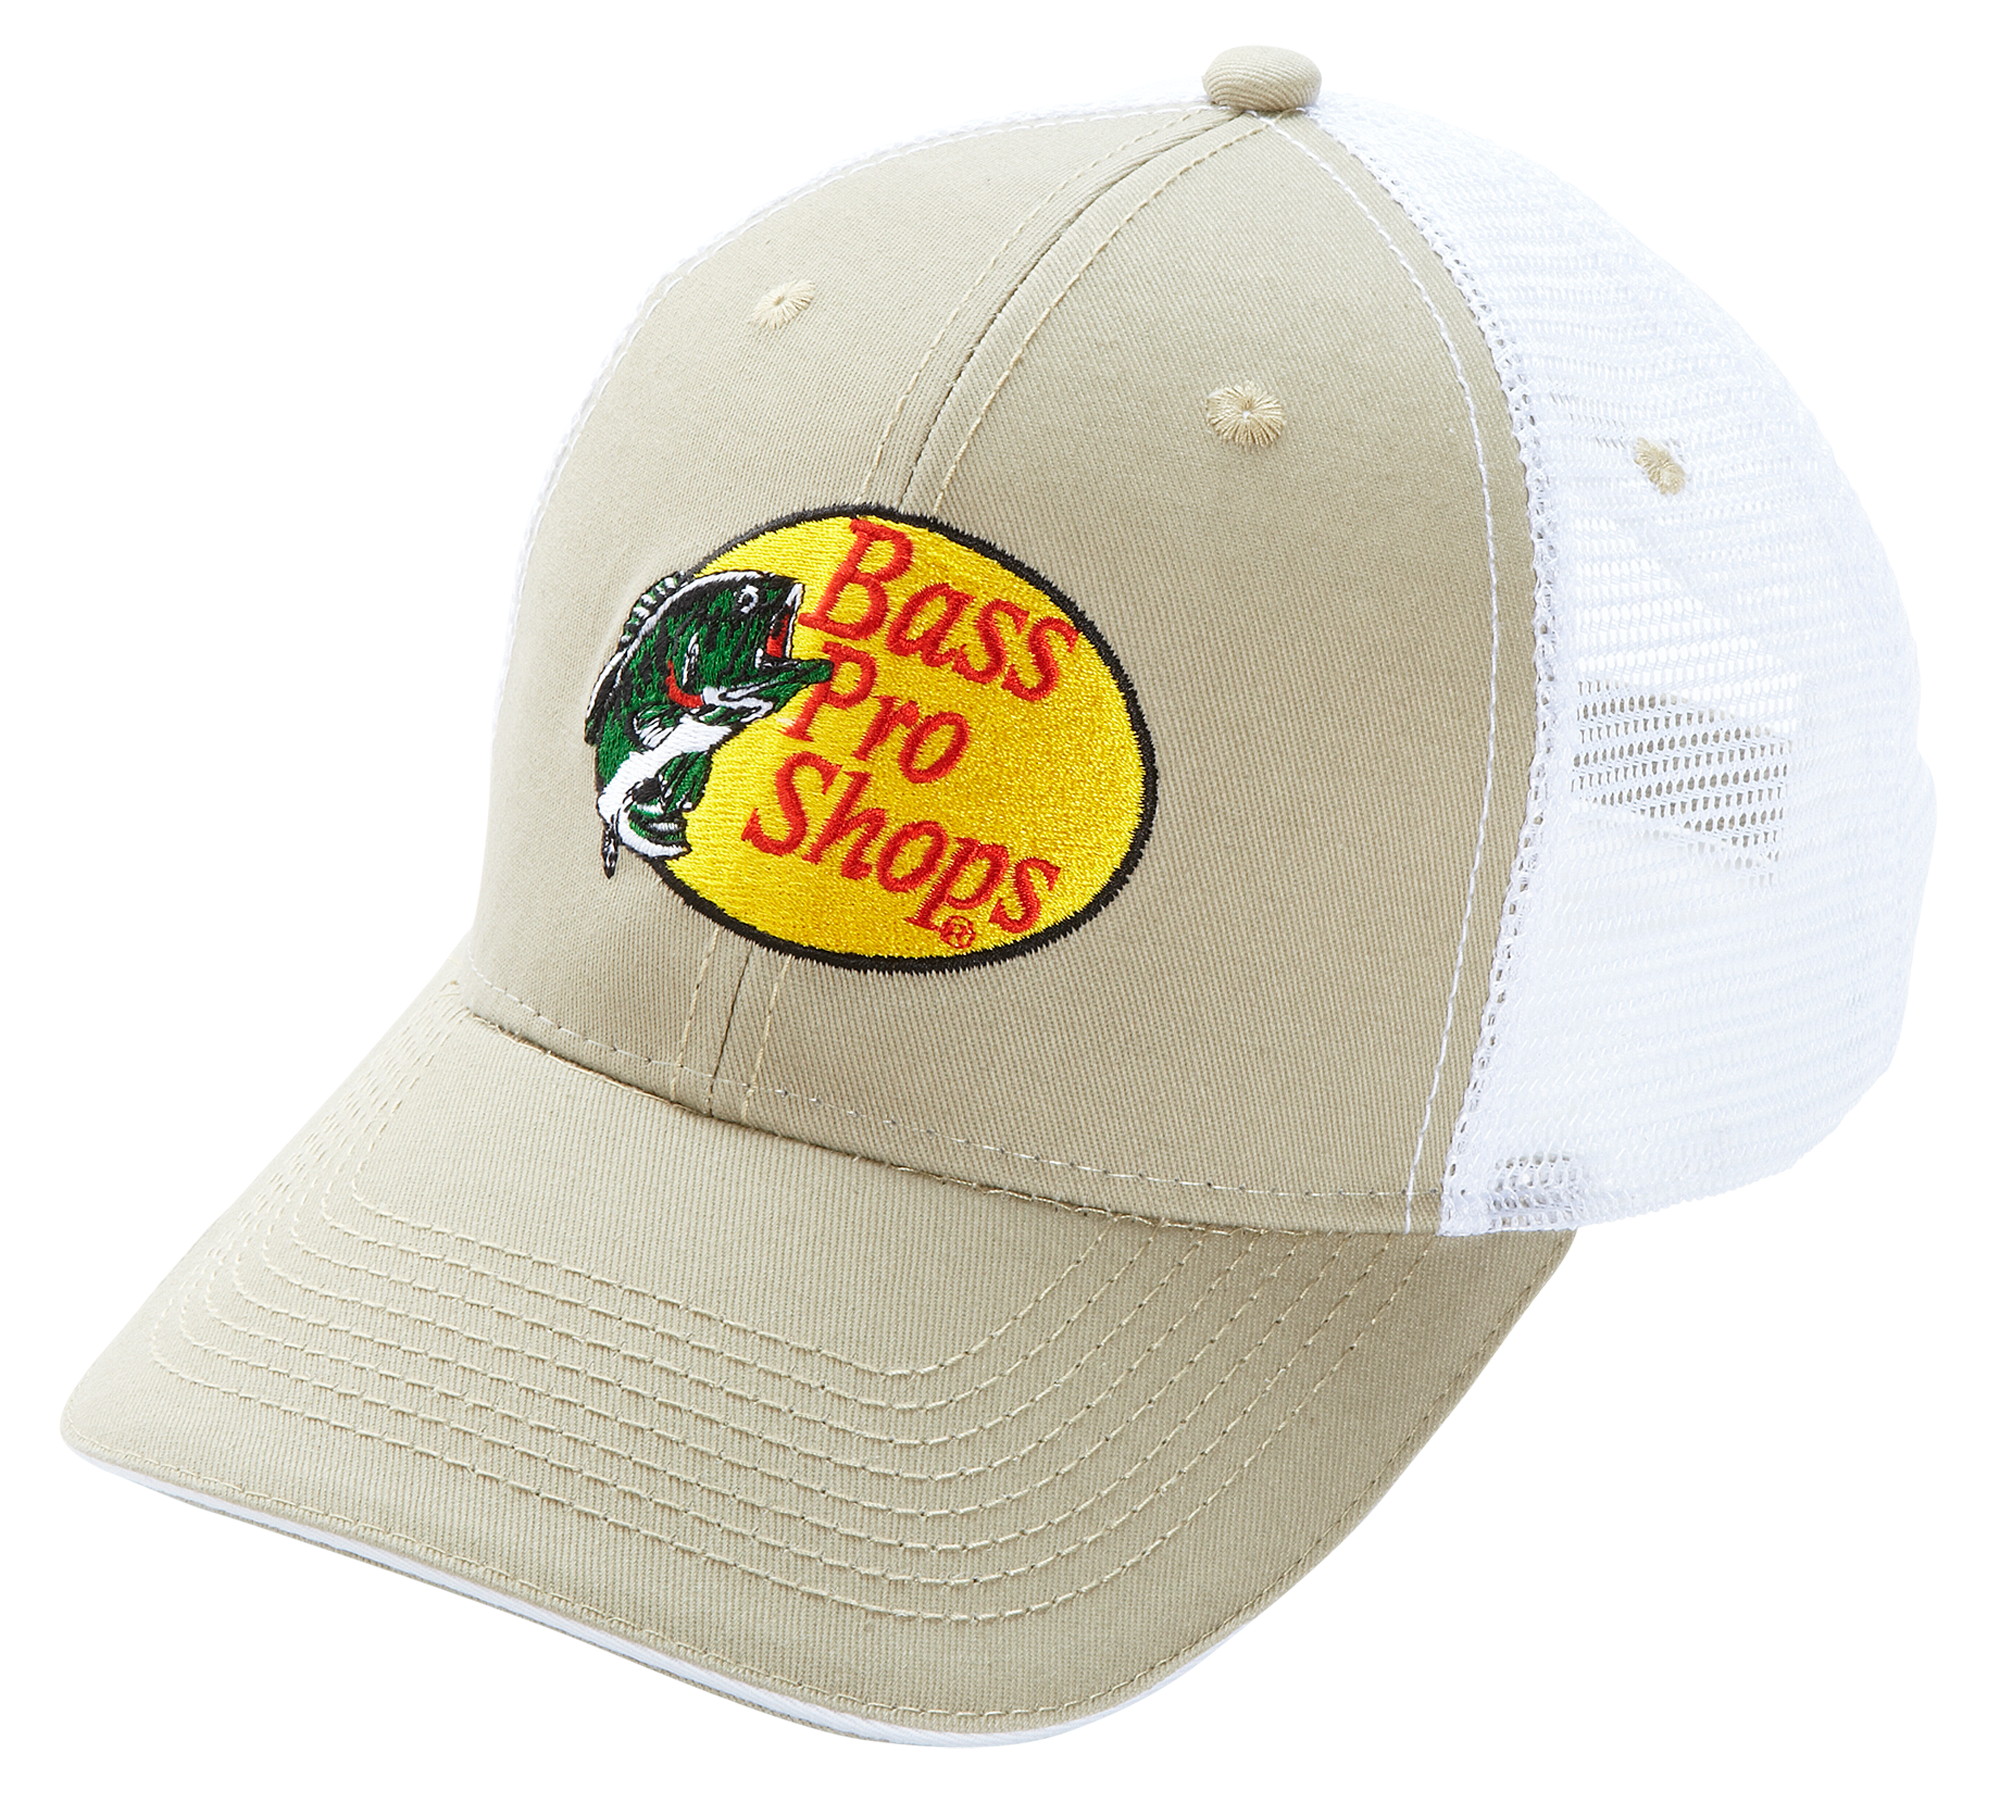 Bass Pro Shops Mesh Caps